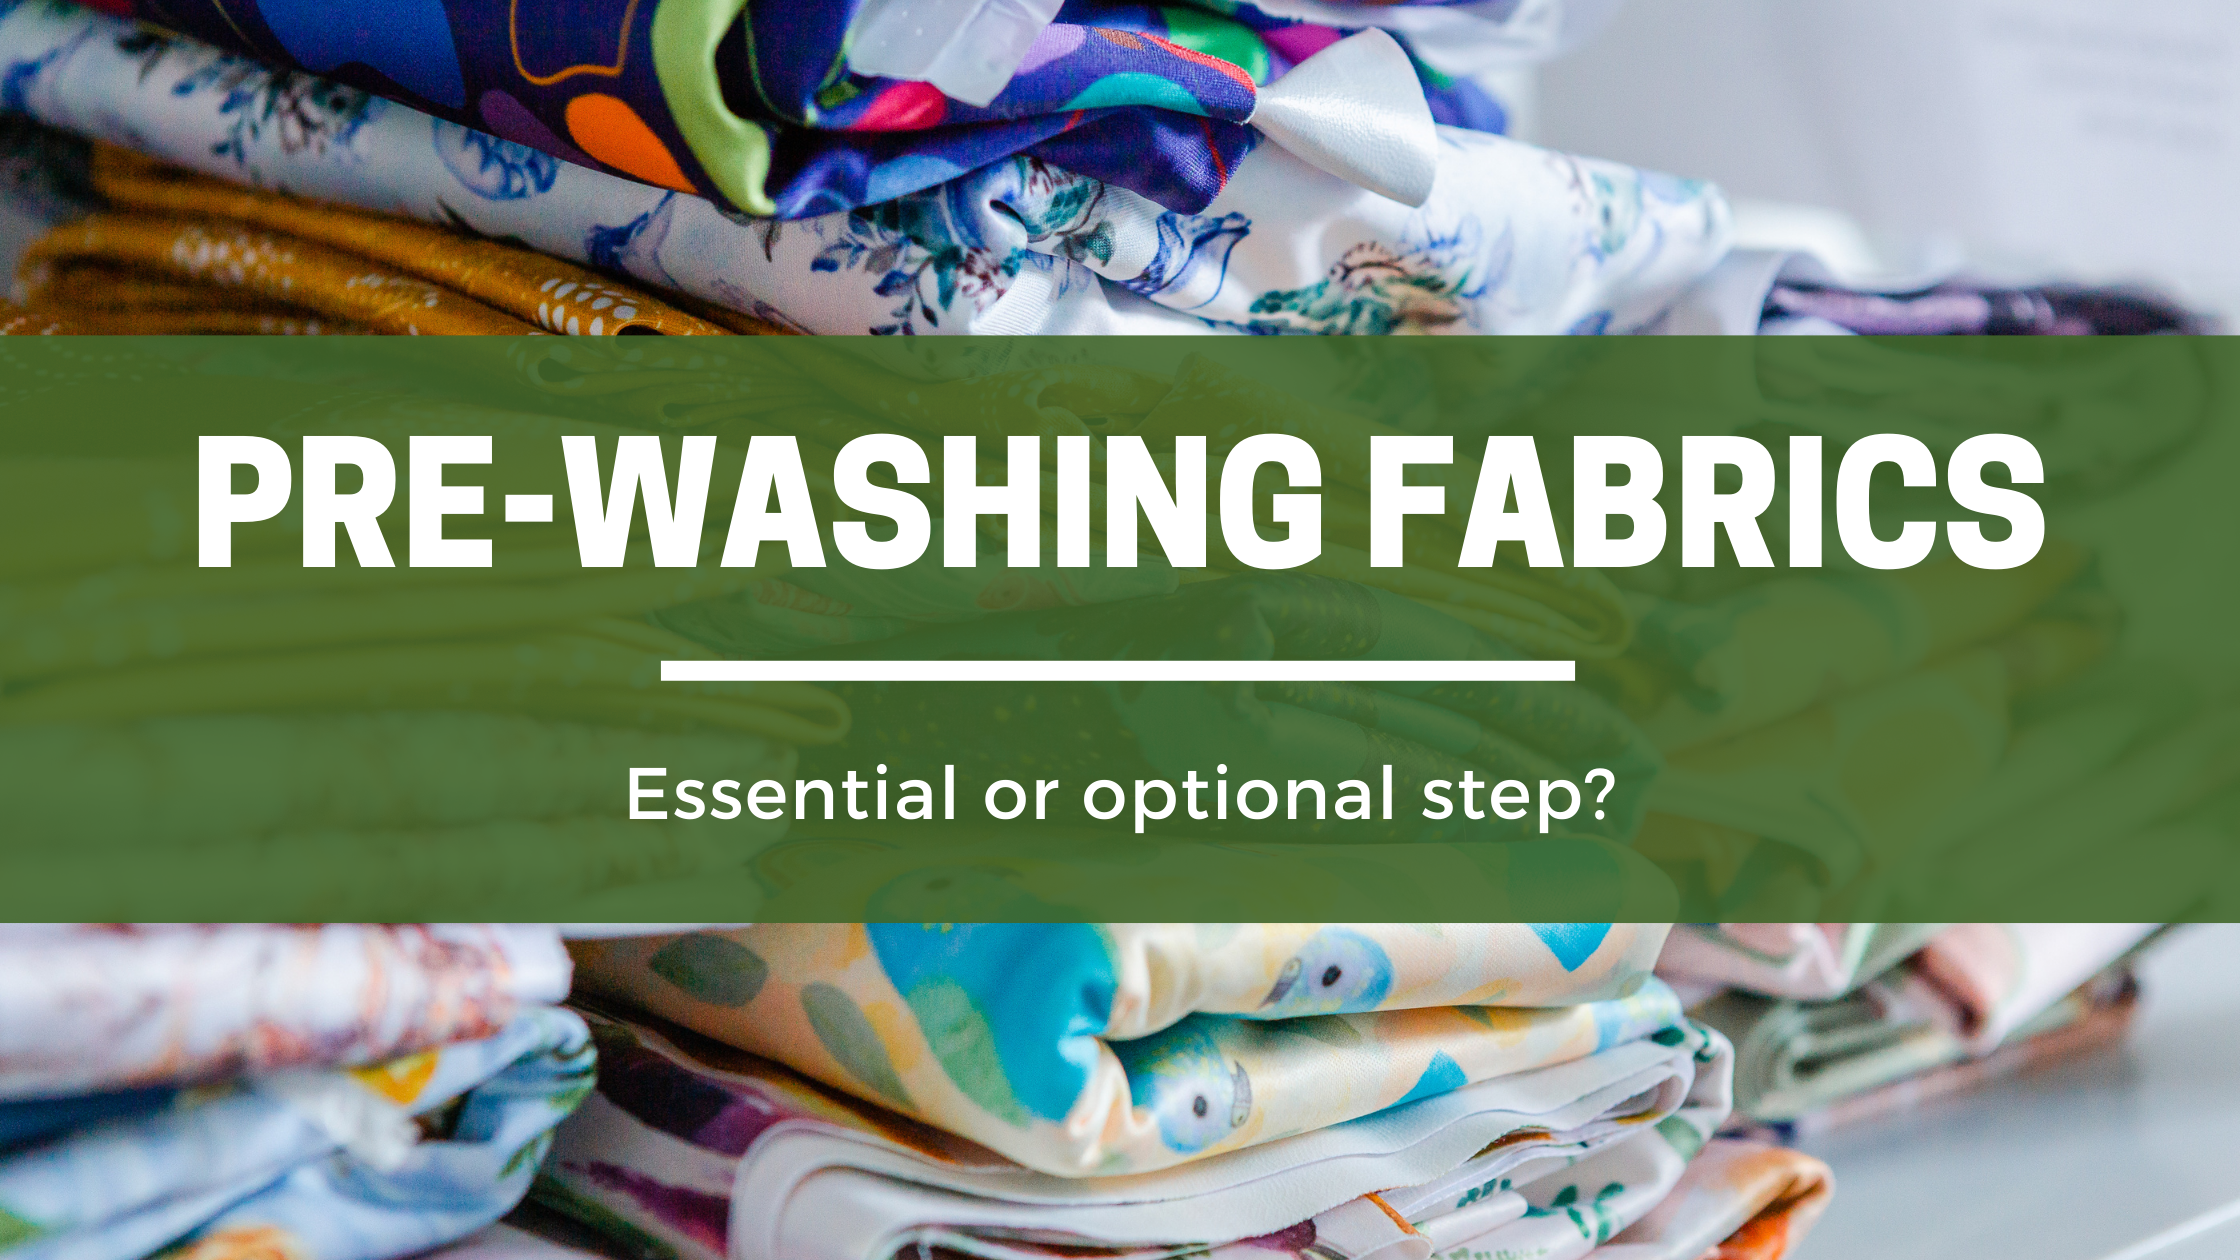 Should I pre-wash my fabrics?